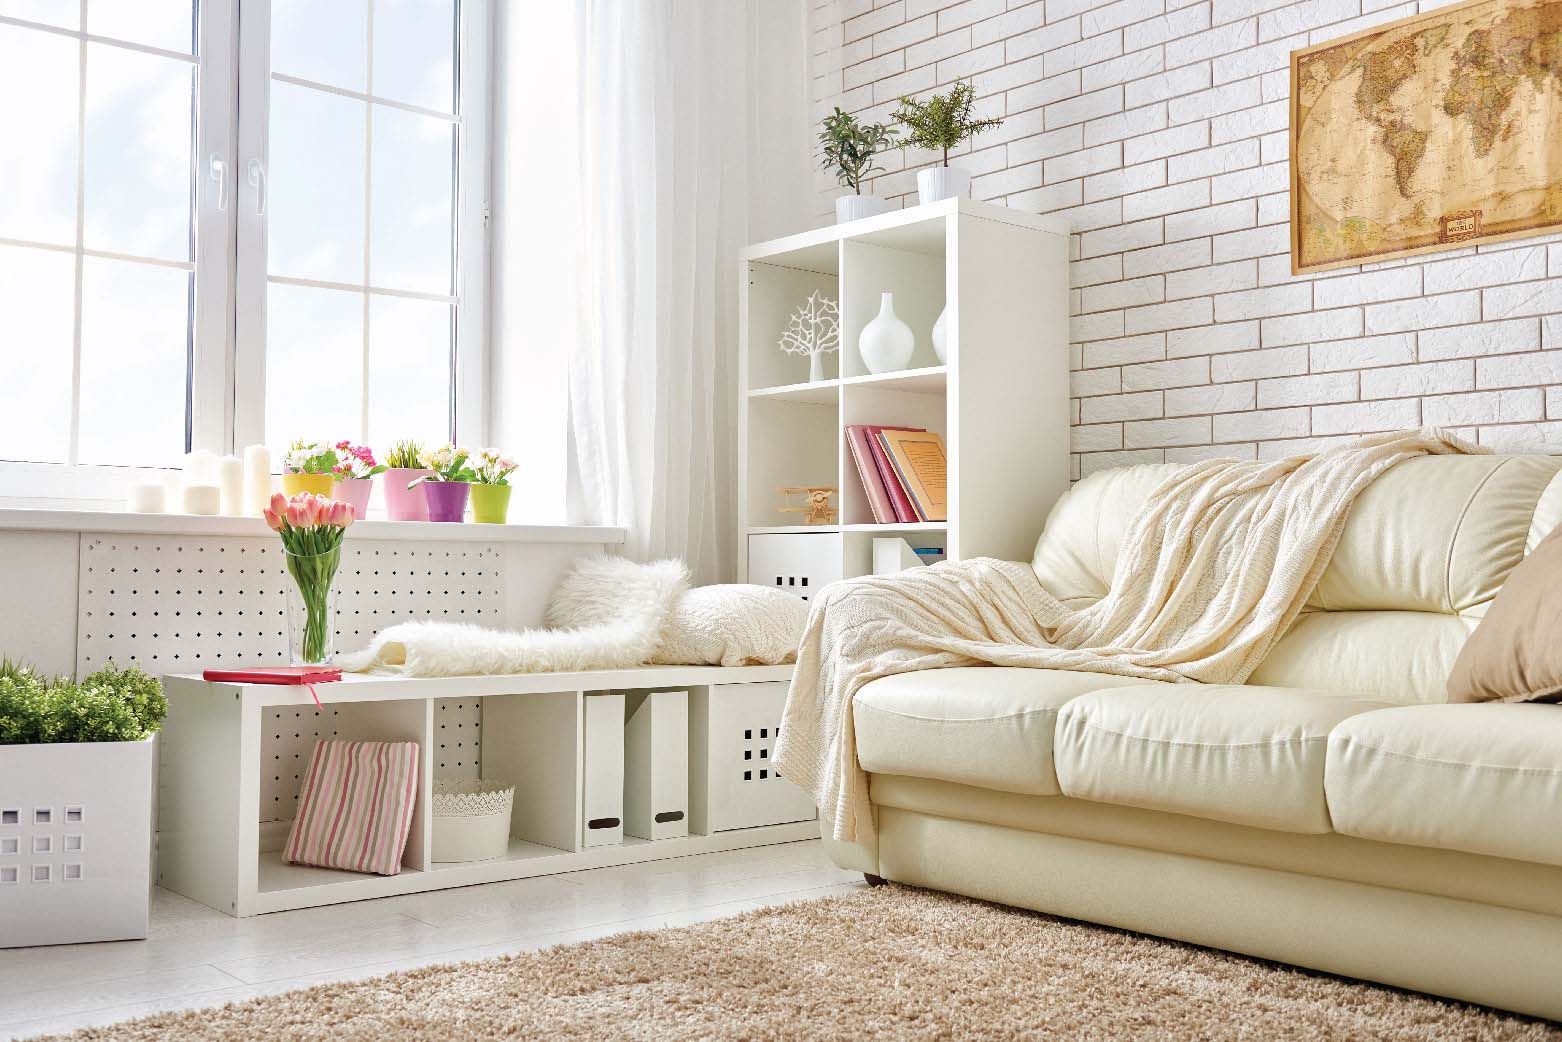 Budget renovation ideas for living room